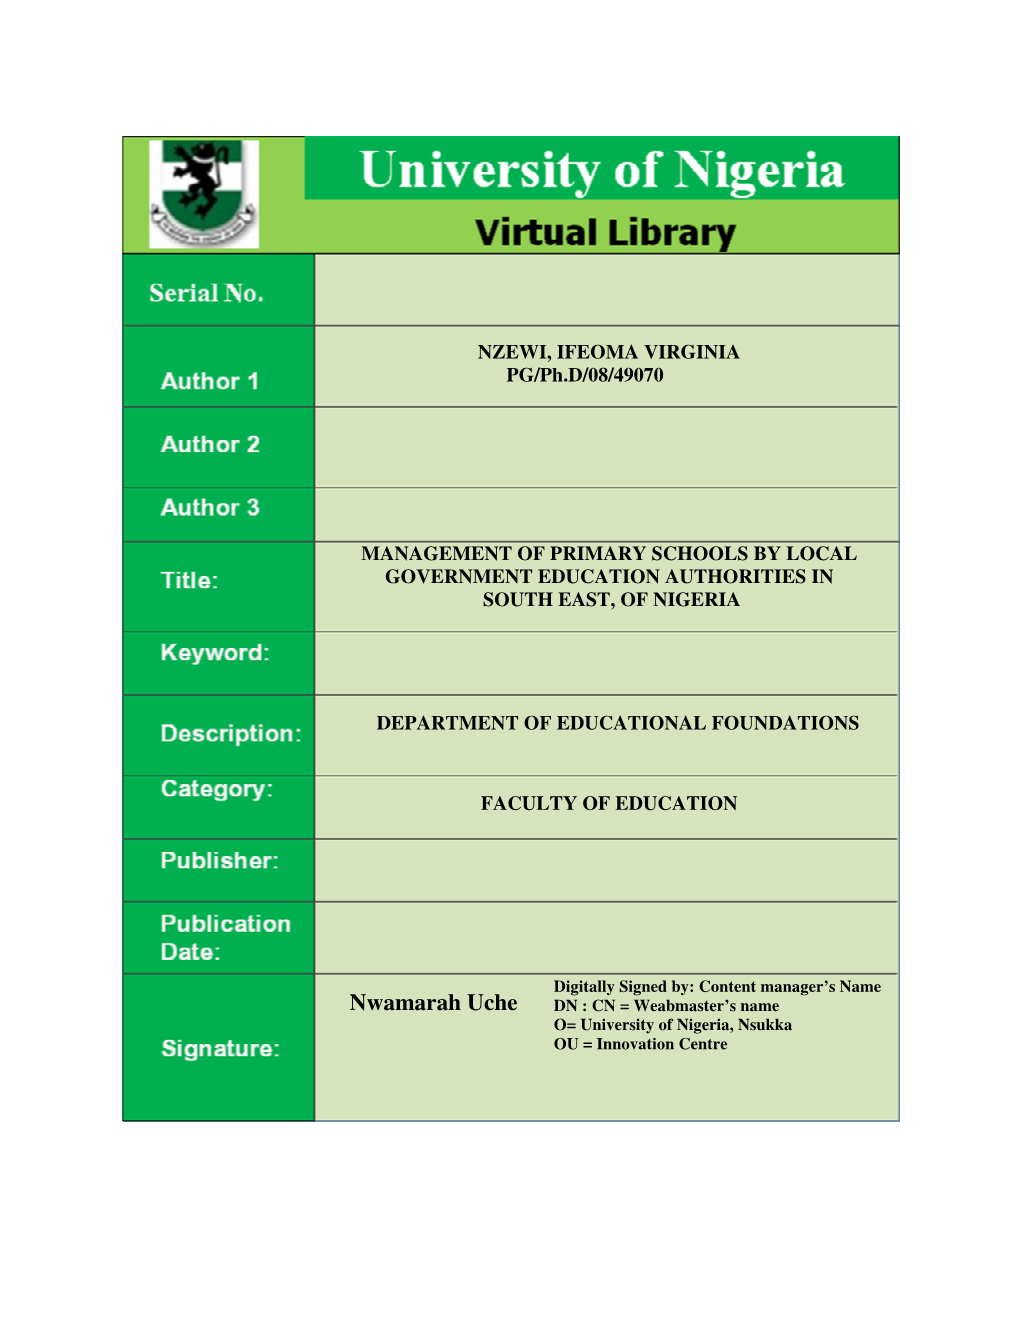 Nwamarah Uche DN : CN = Weabmaster’S Name O= University of Nigeria, Nsukka OU = Innovation Centre